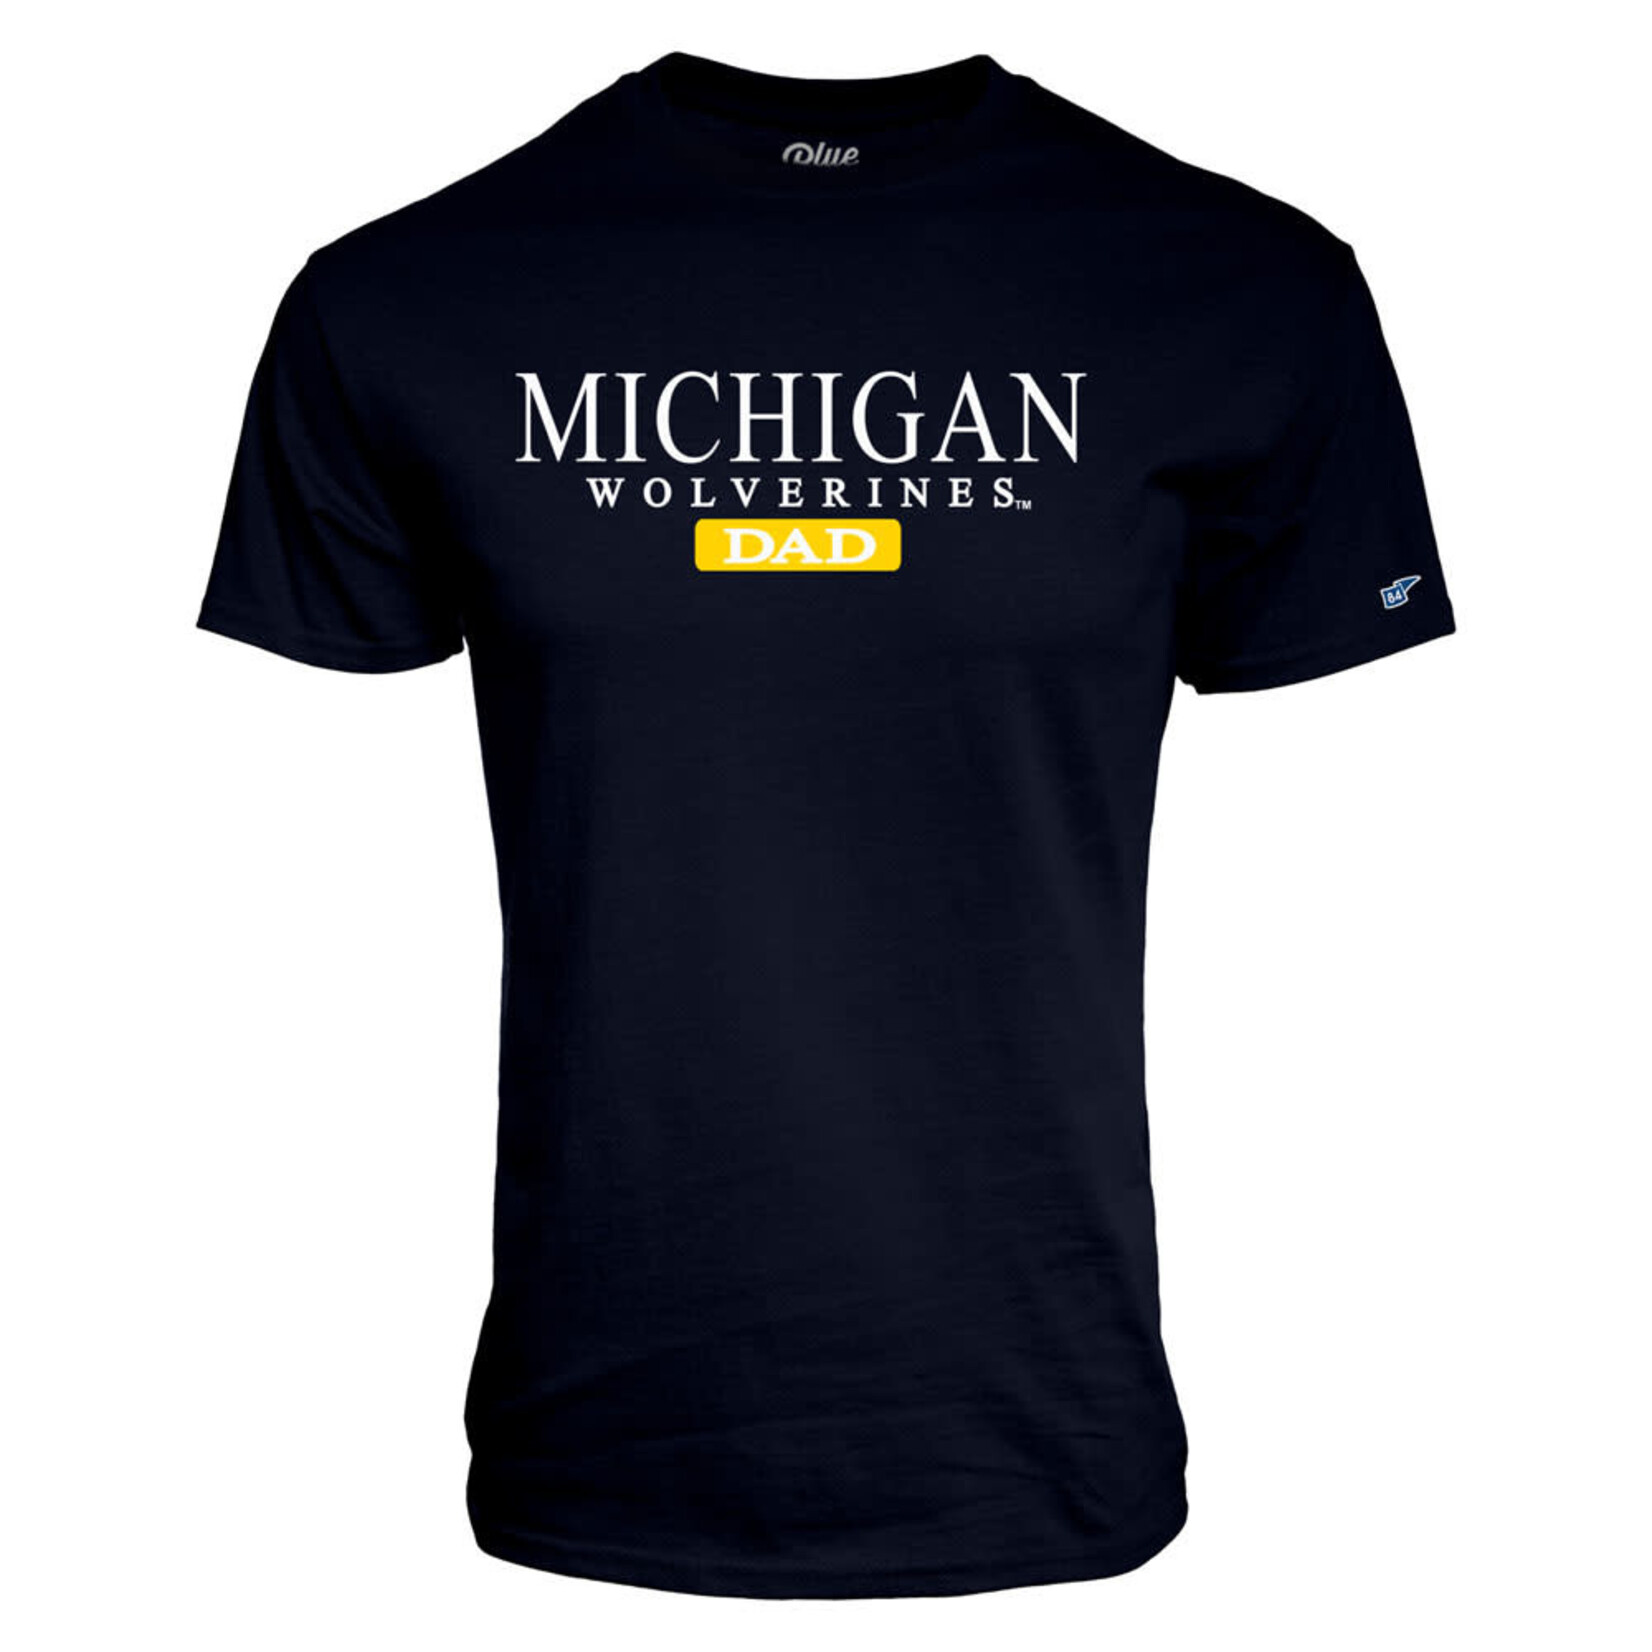 Blue 84 NCAA Michigan Wolverines Mens Shirt Tee Short Sleeve Tamarac Block Dad